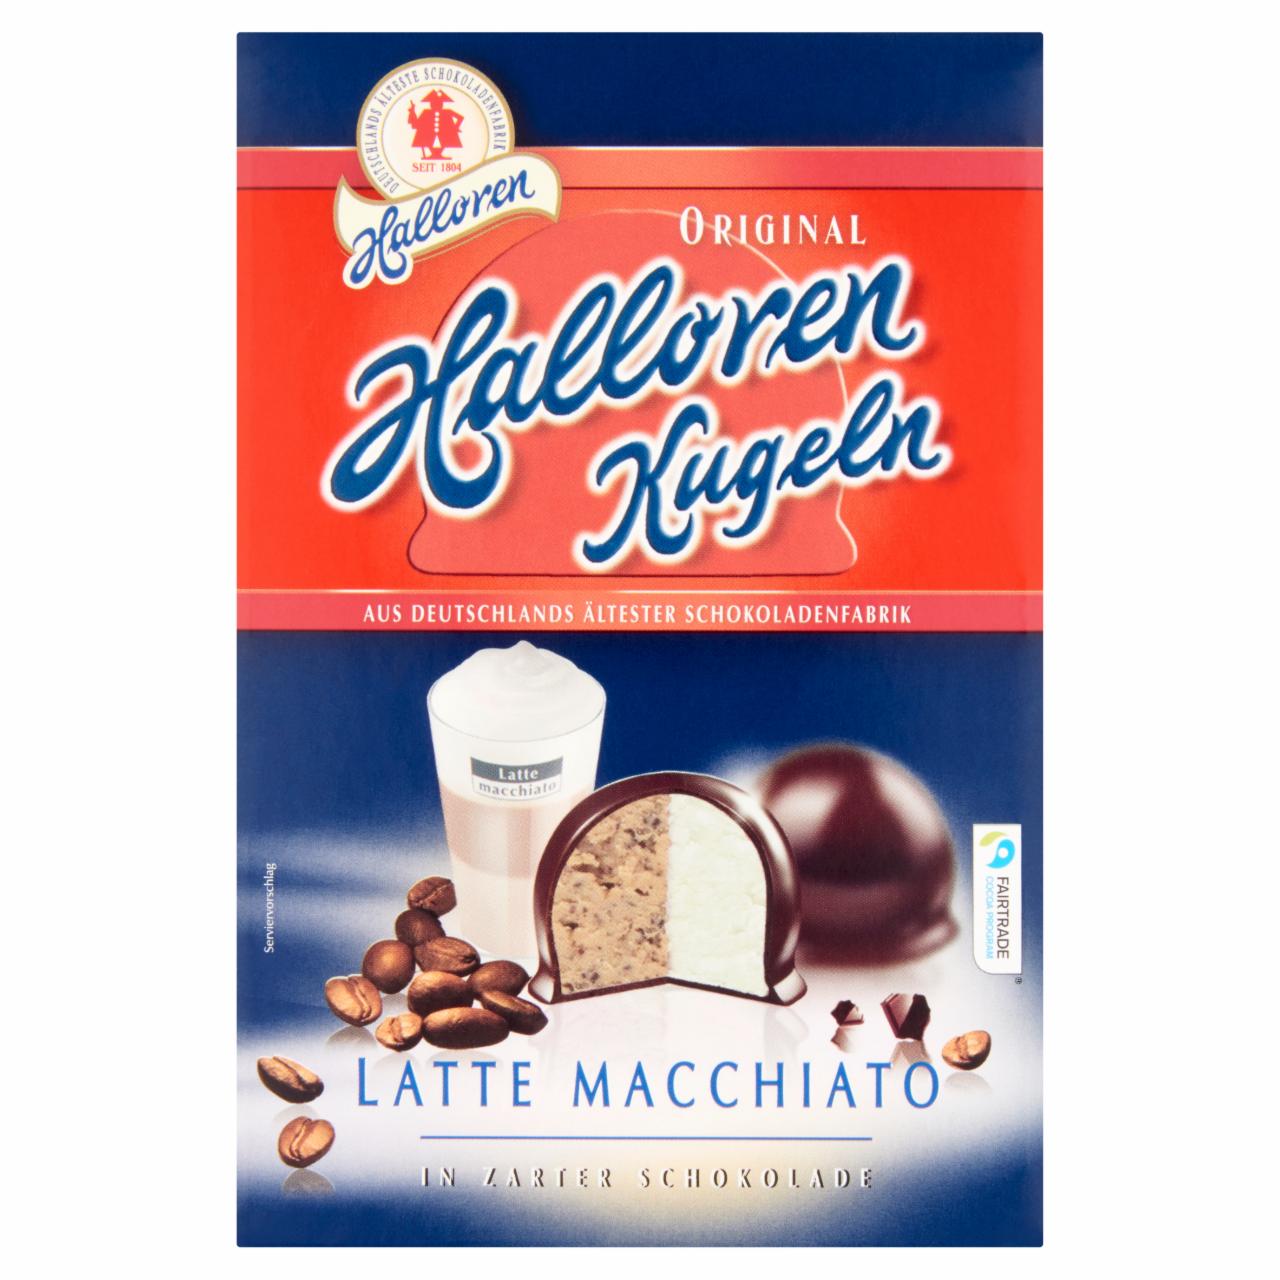 Képek - Halloren Latte Macchiato csokigolyó 125 g